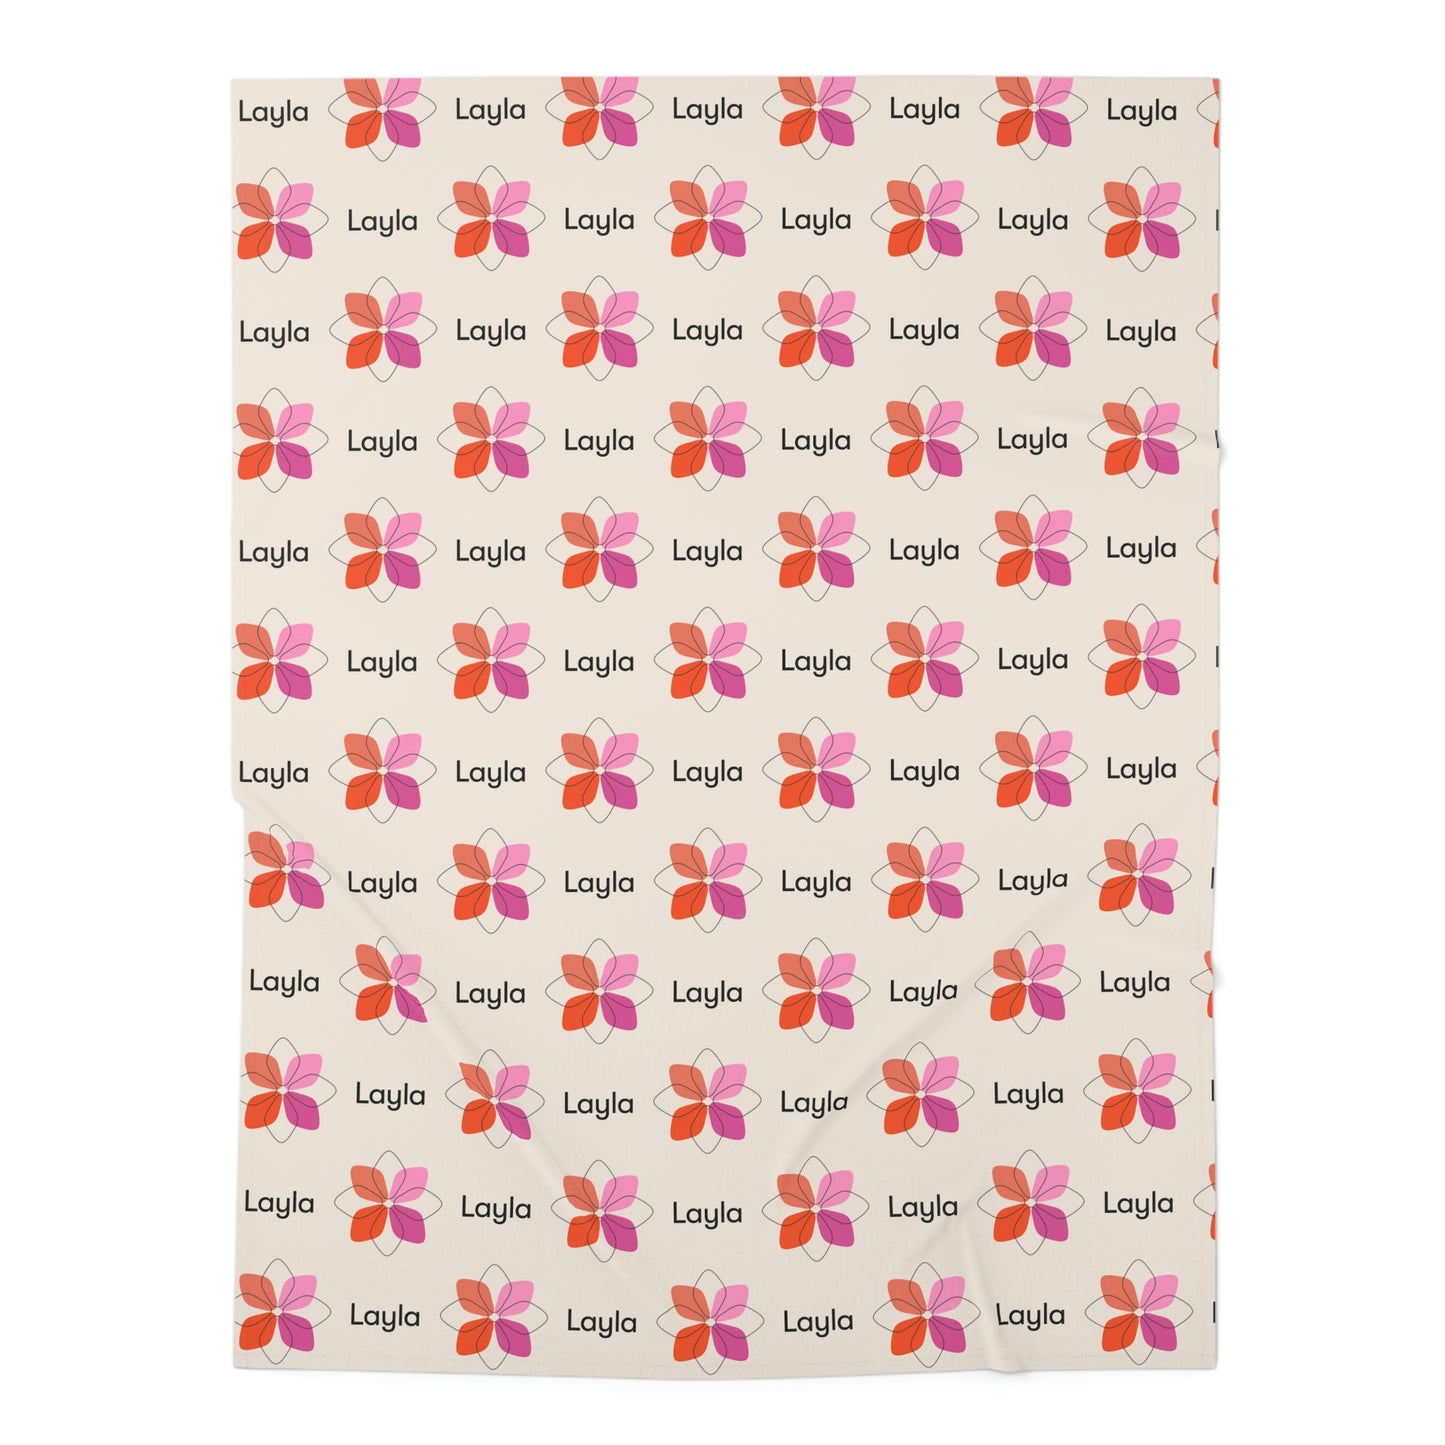 Jersey personalized baby blanket in pink boho geometric flower pattern laid flat